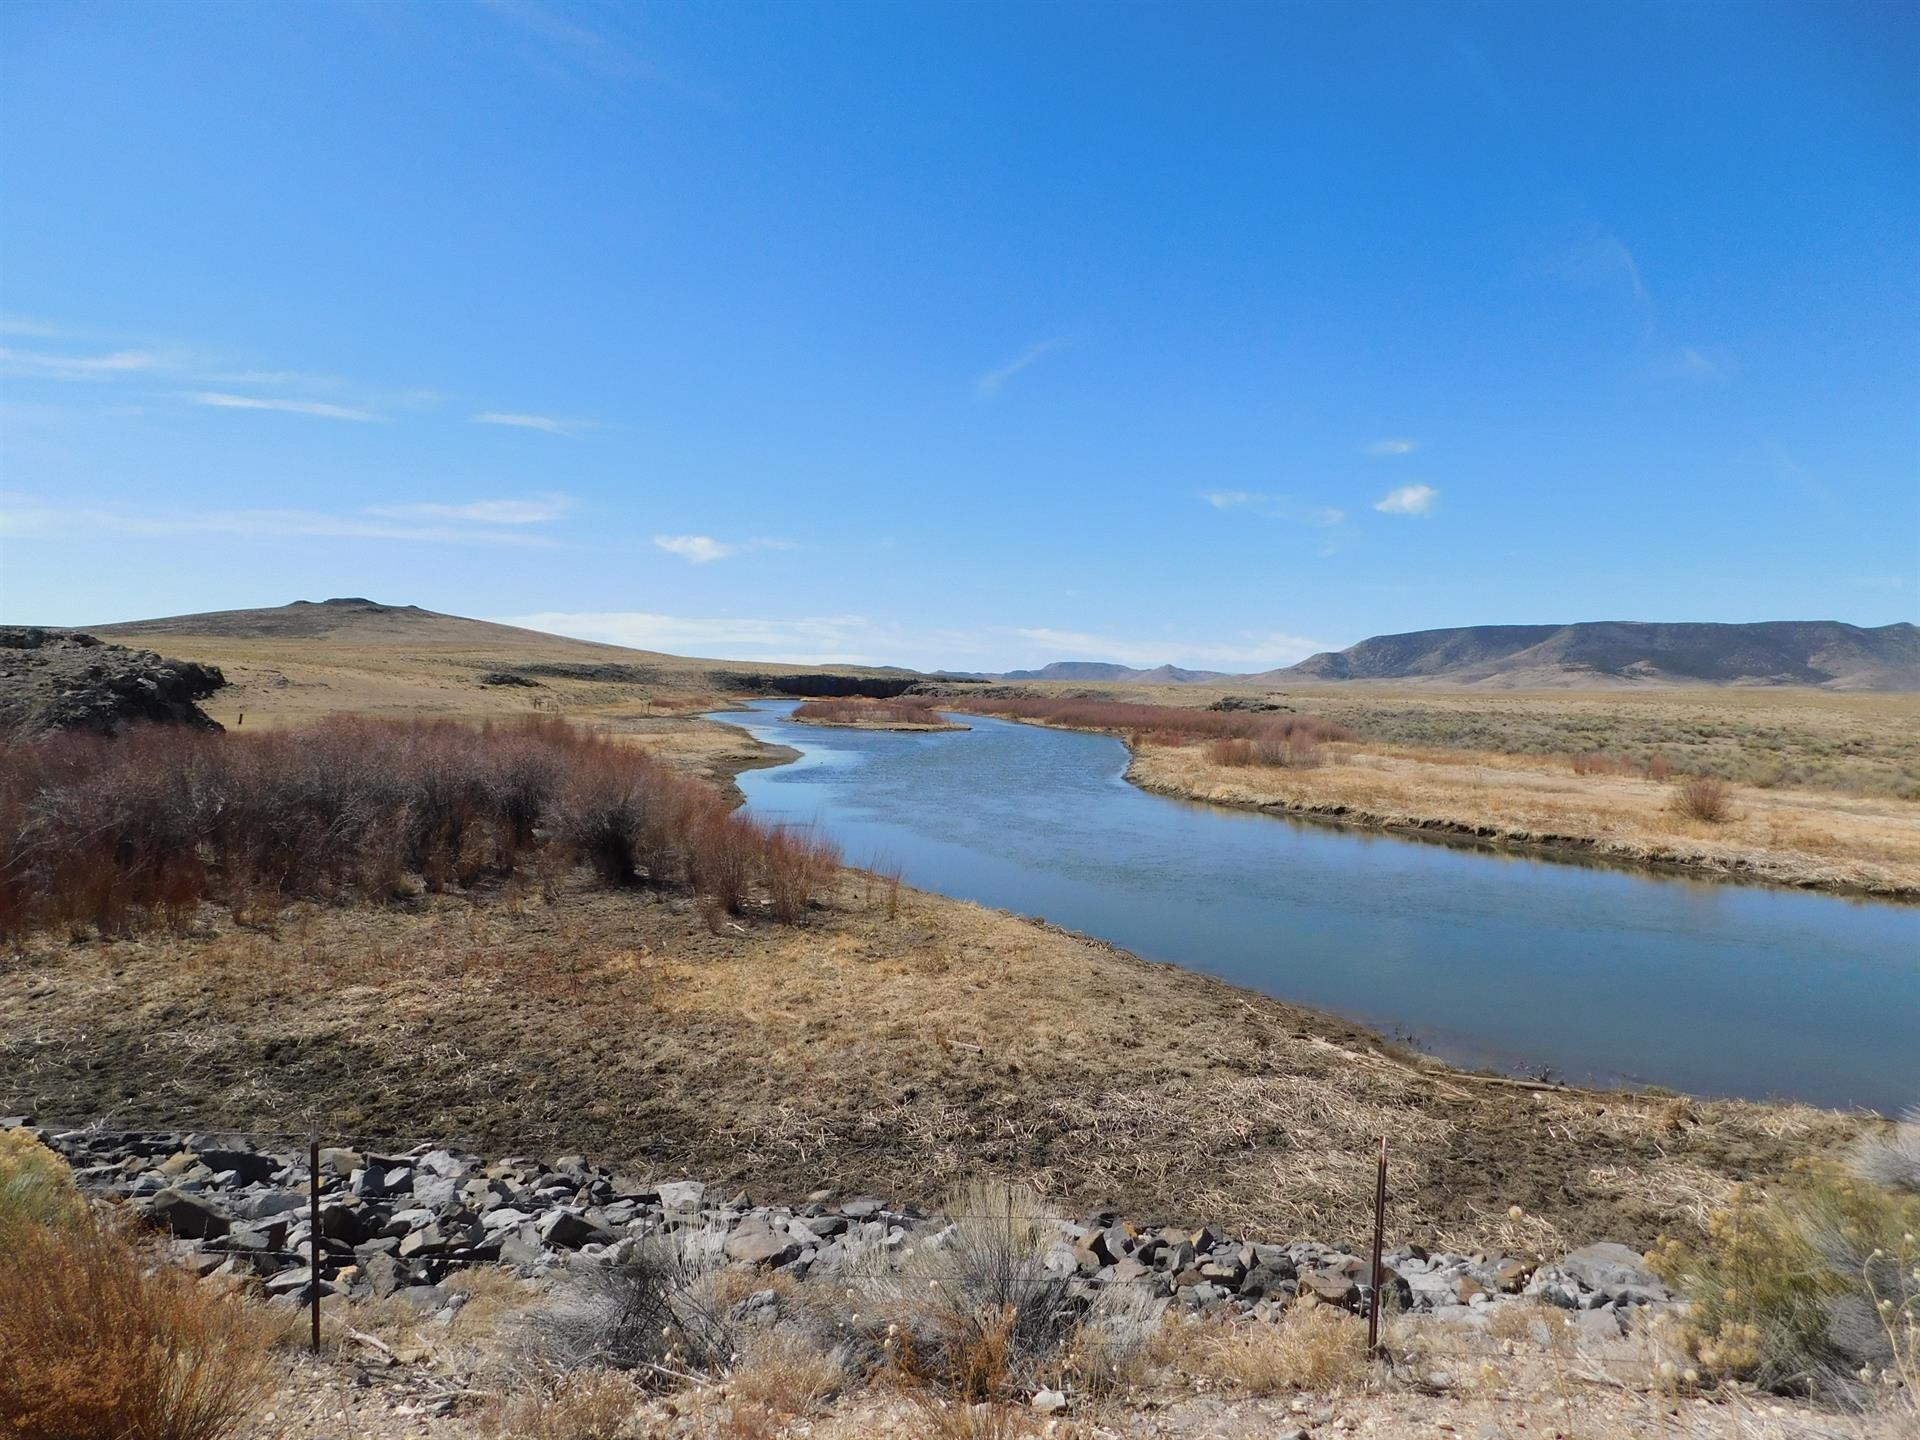 Rio Grande River property, Land for sale, Scenic beauty, Colorado landscape, 1920x1440 HD Desktop